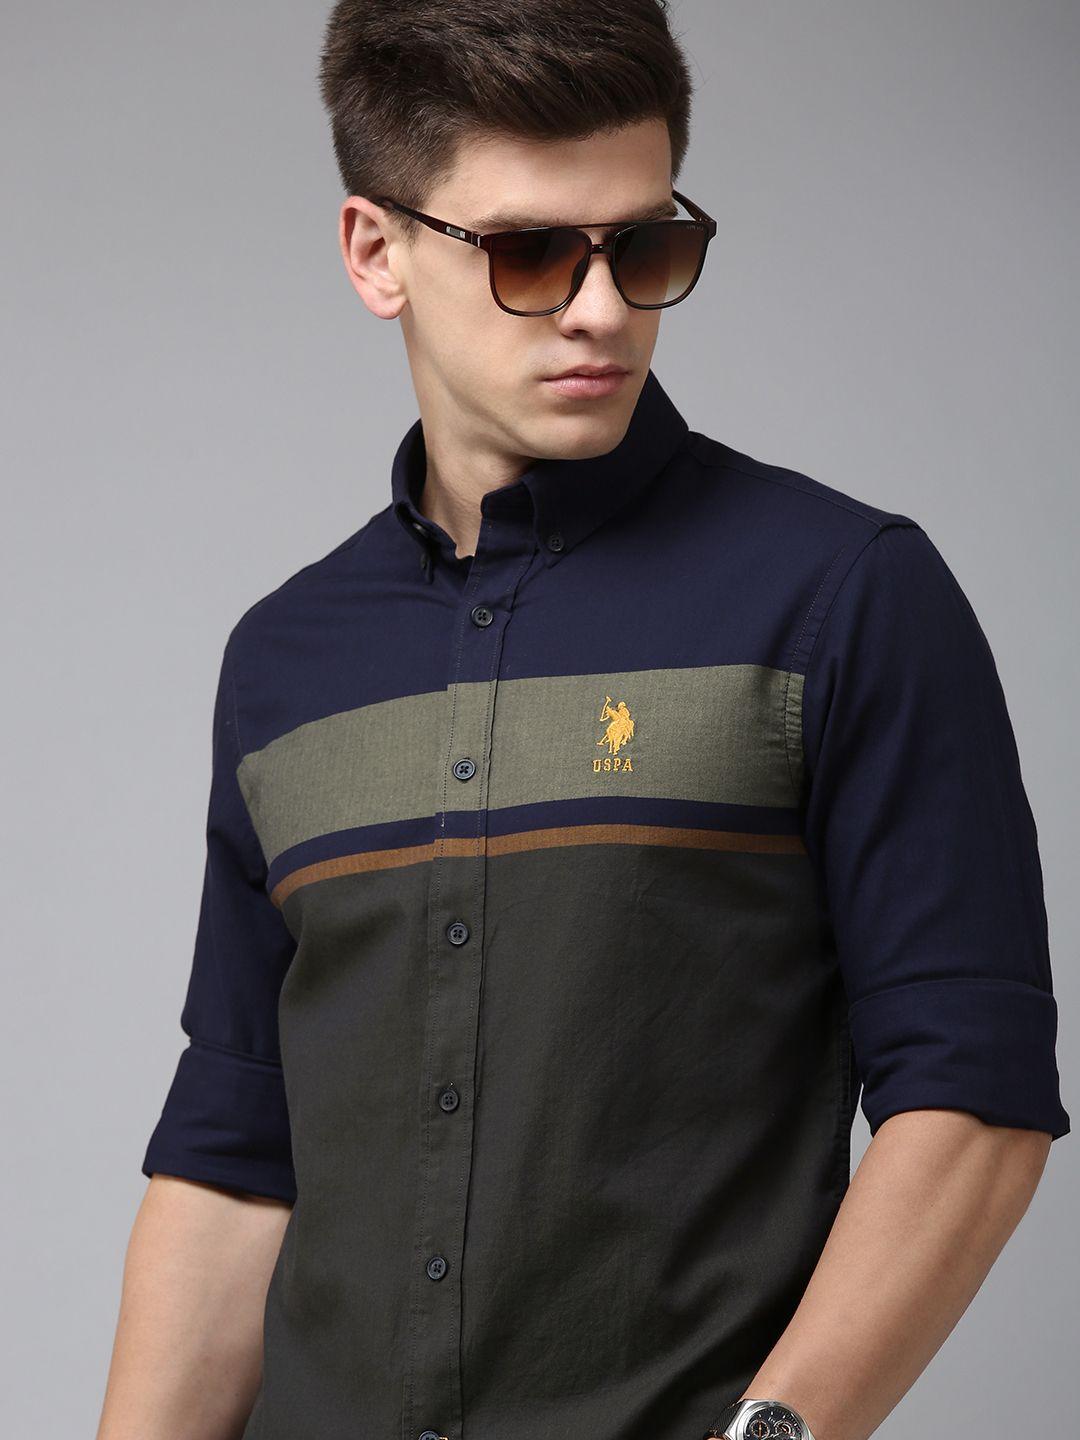 u.s. polo assn. men tailored fit colourblocked pure cotton casual shirt